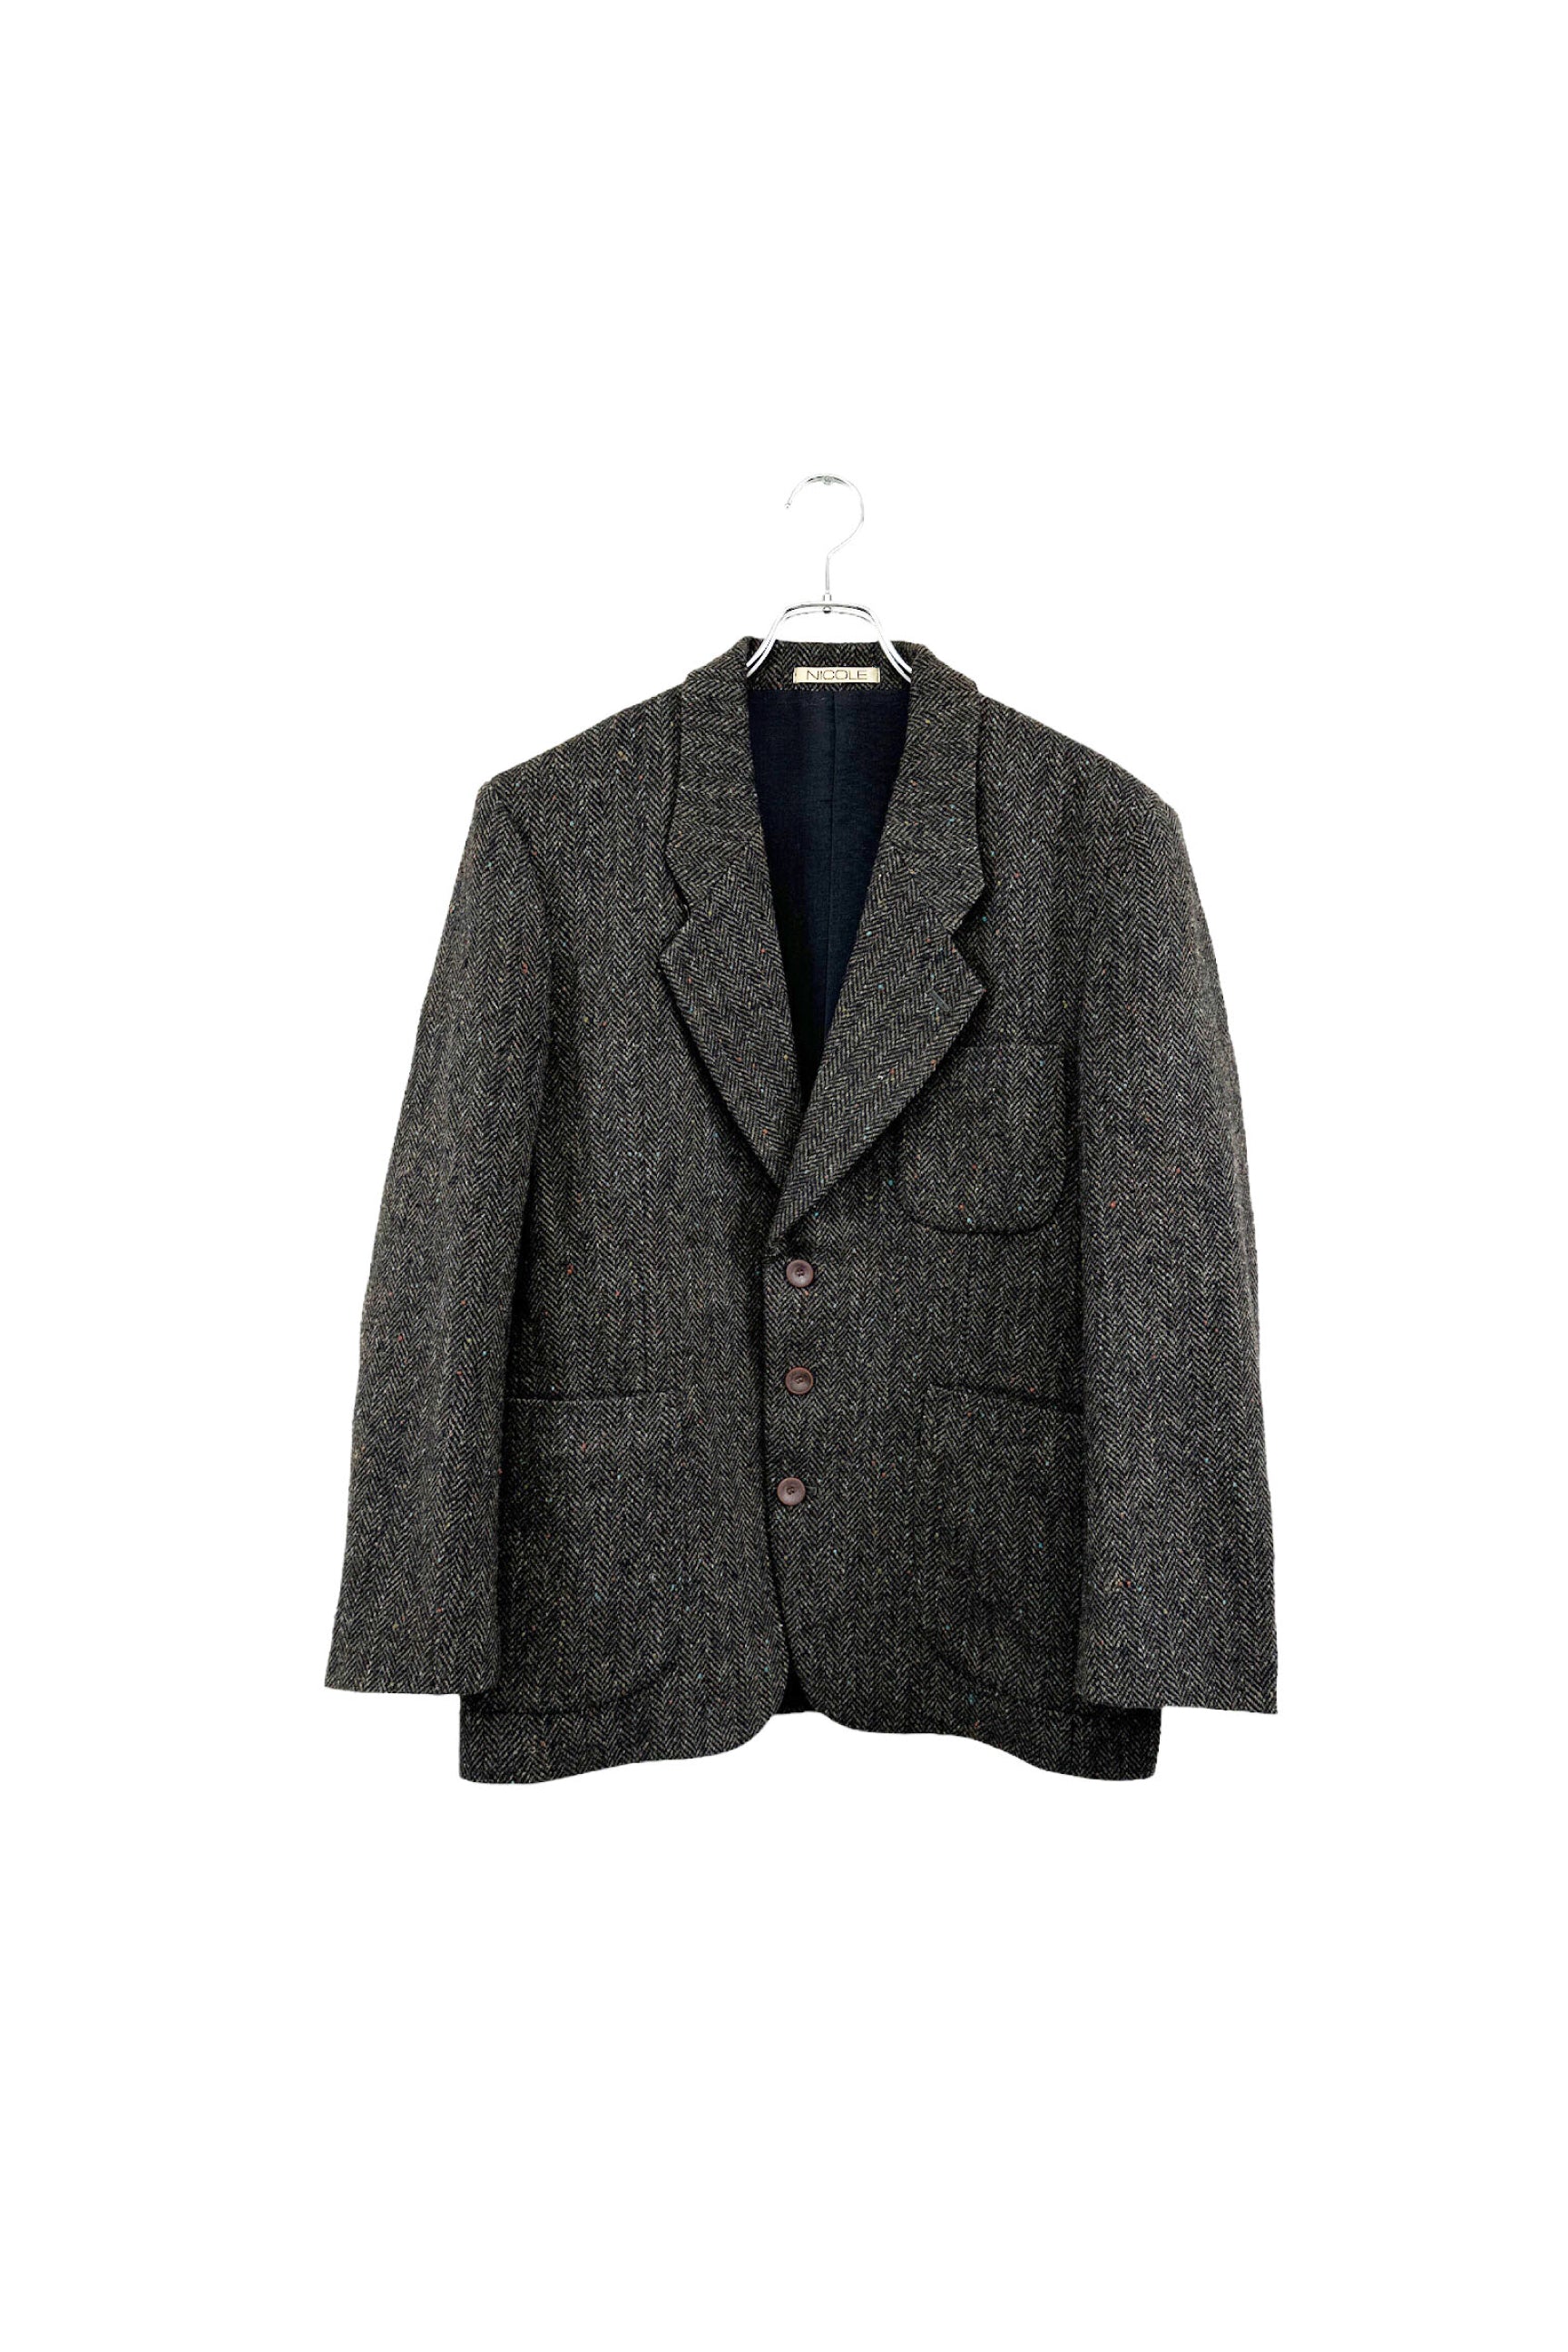 80's monsieur NICOLE tailored jacket – ReSCOUNT STORE